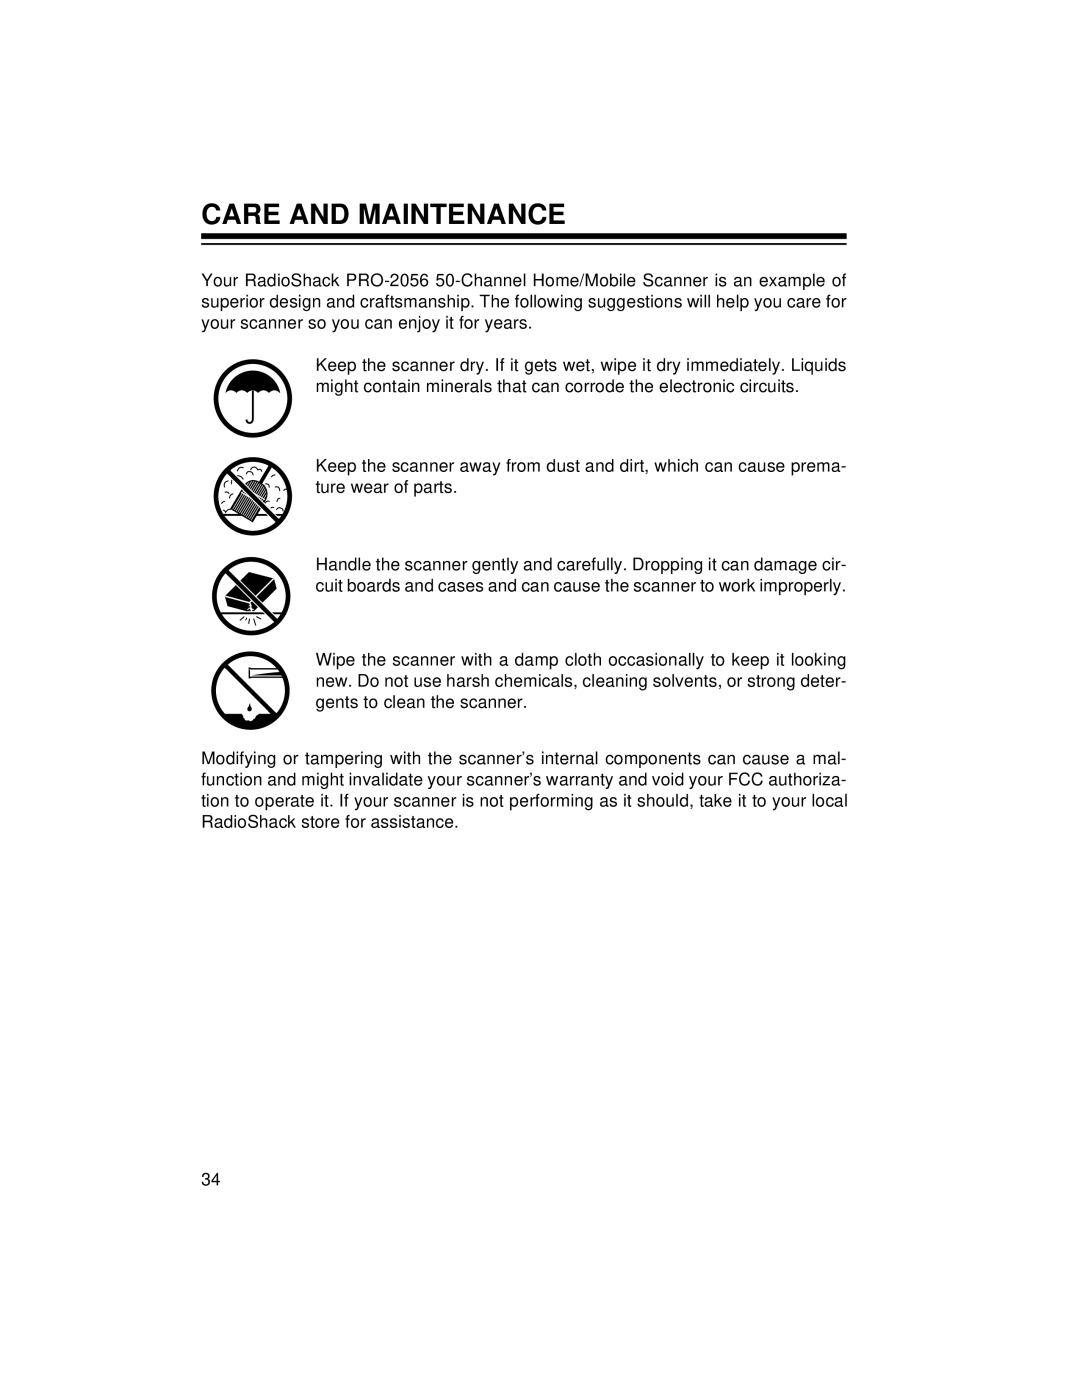 Radio Shack PRO-2056 owner manual Care And Maintenance 